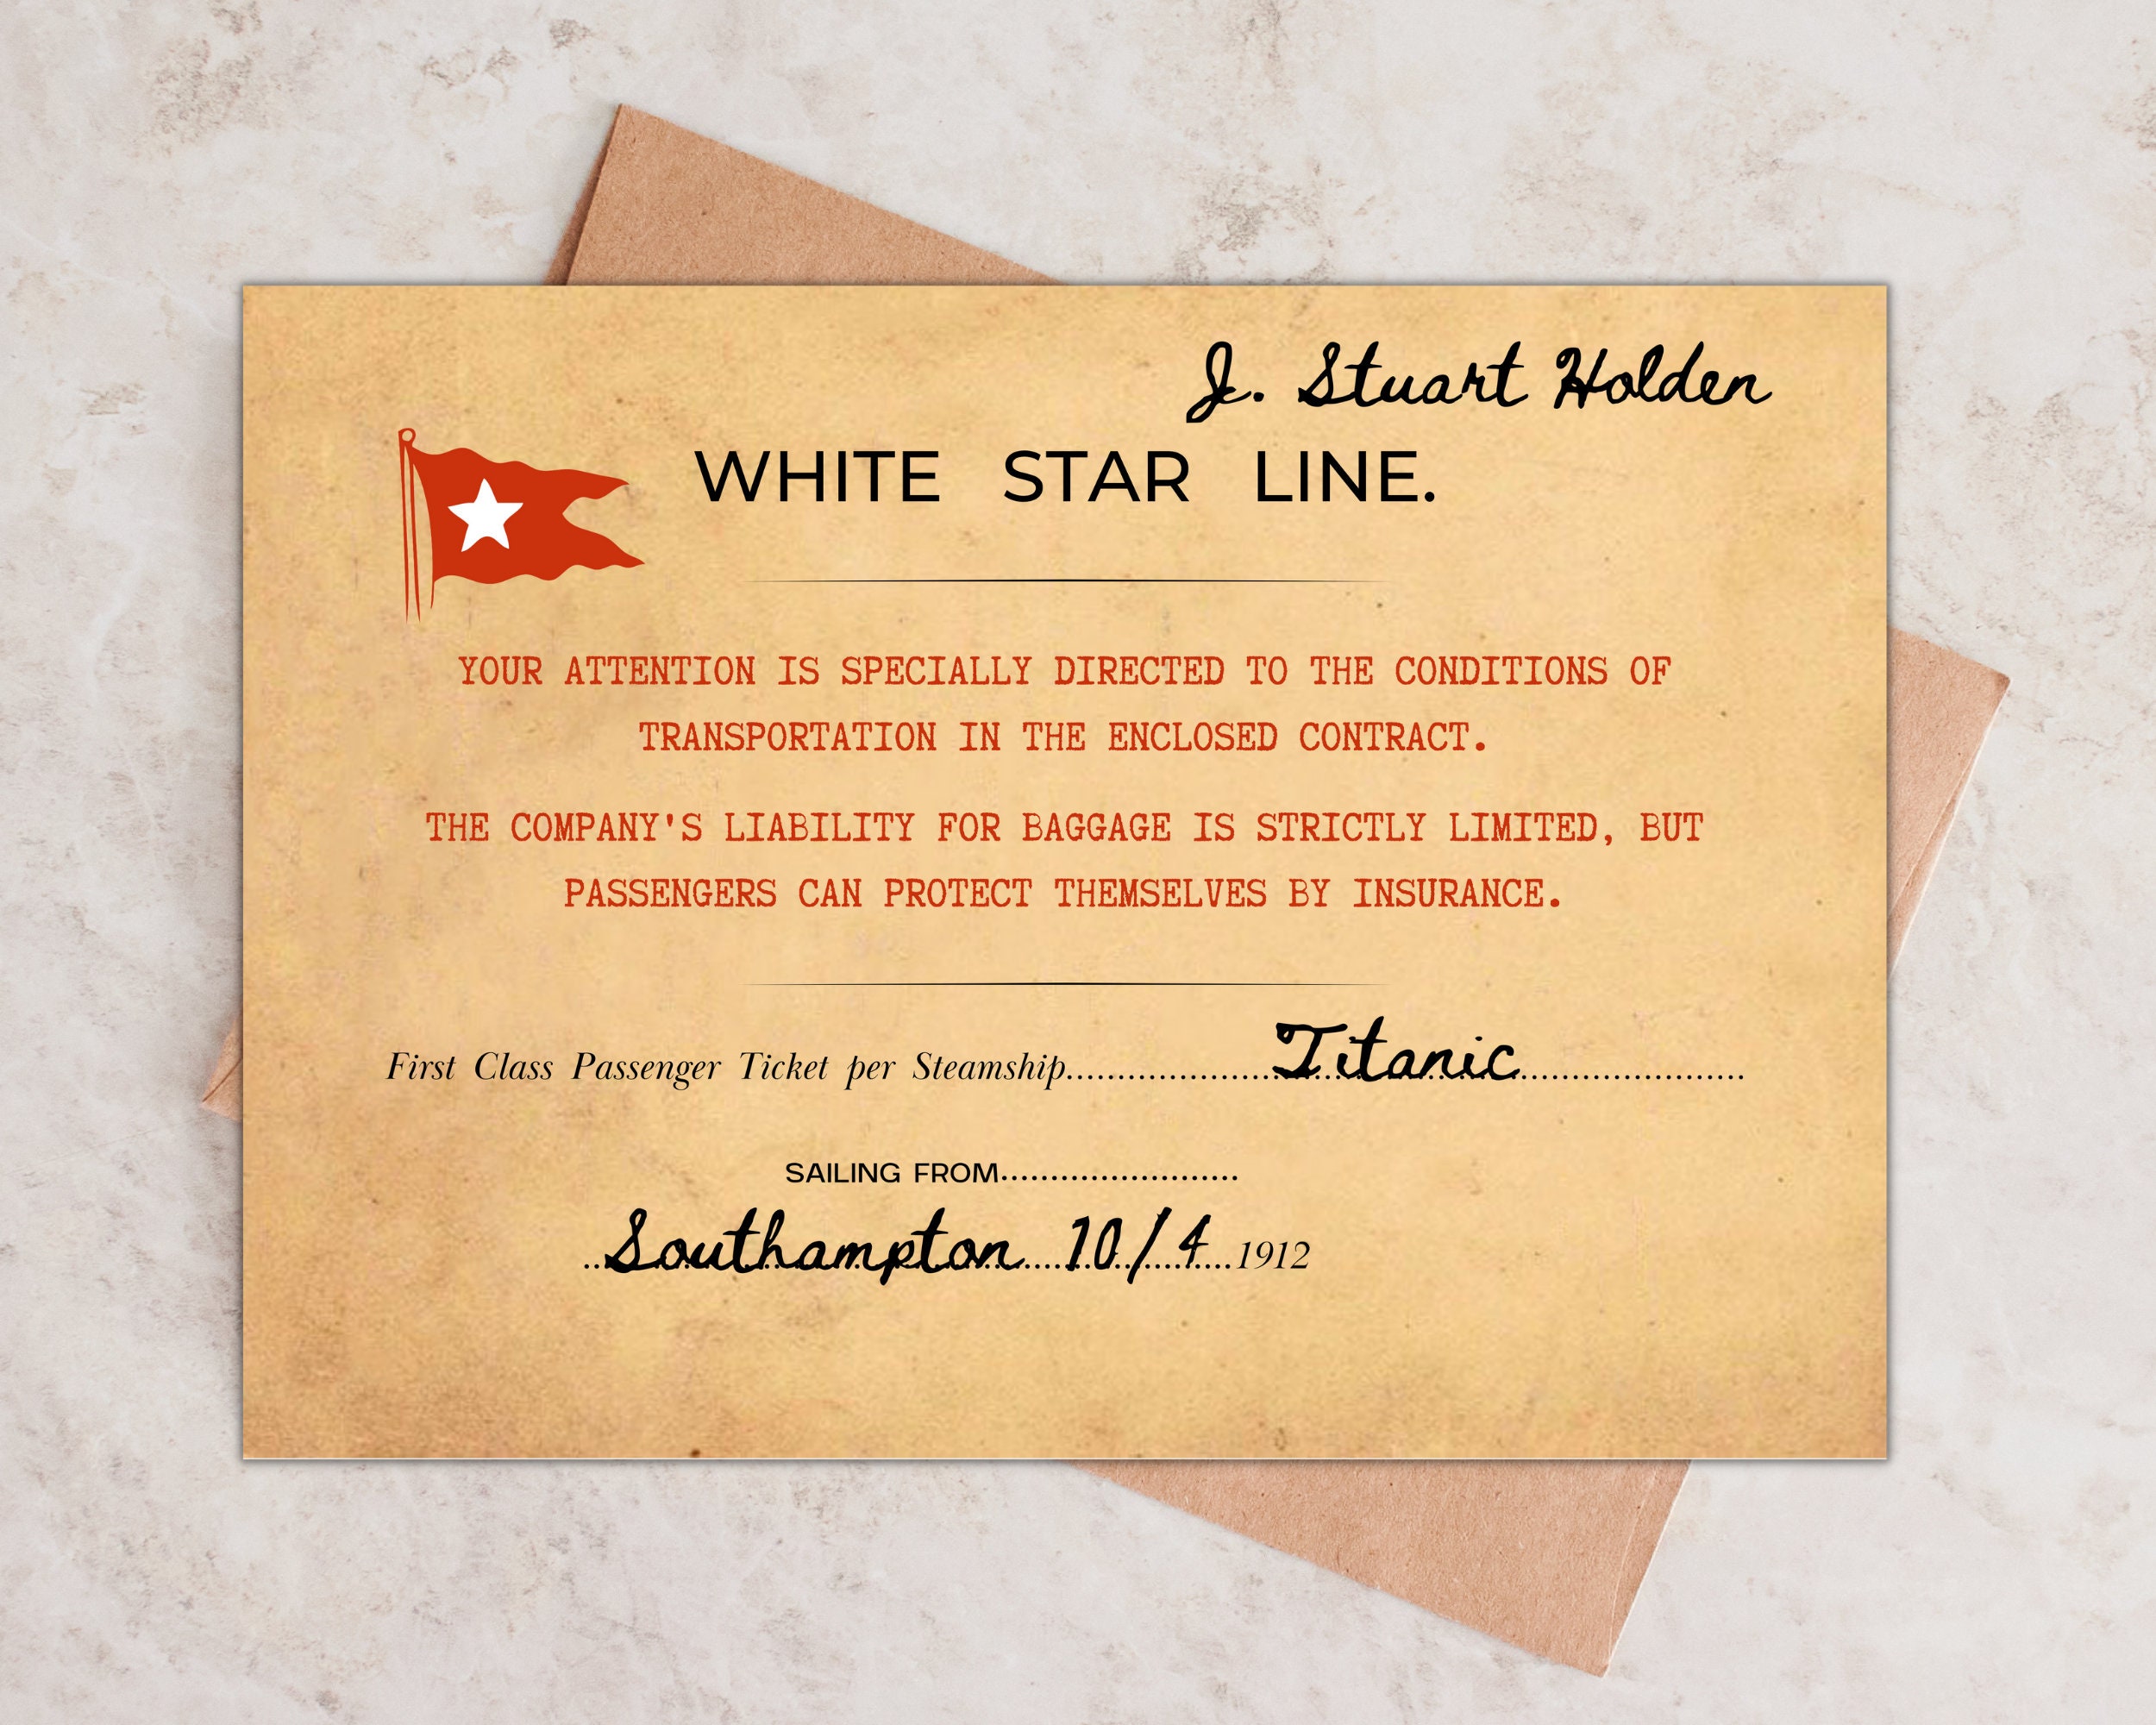 titanic-boarding-pass-printable-template-editable-wedding-etsy